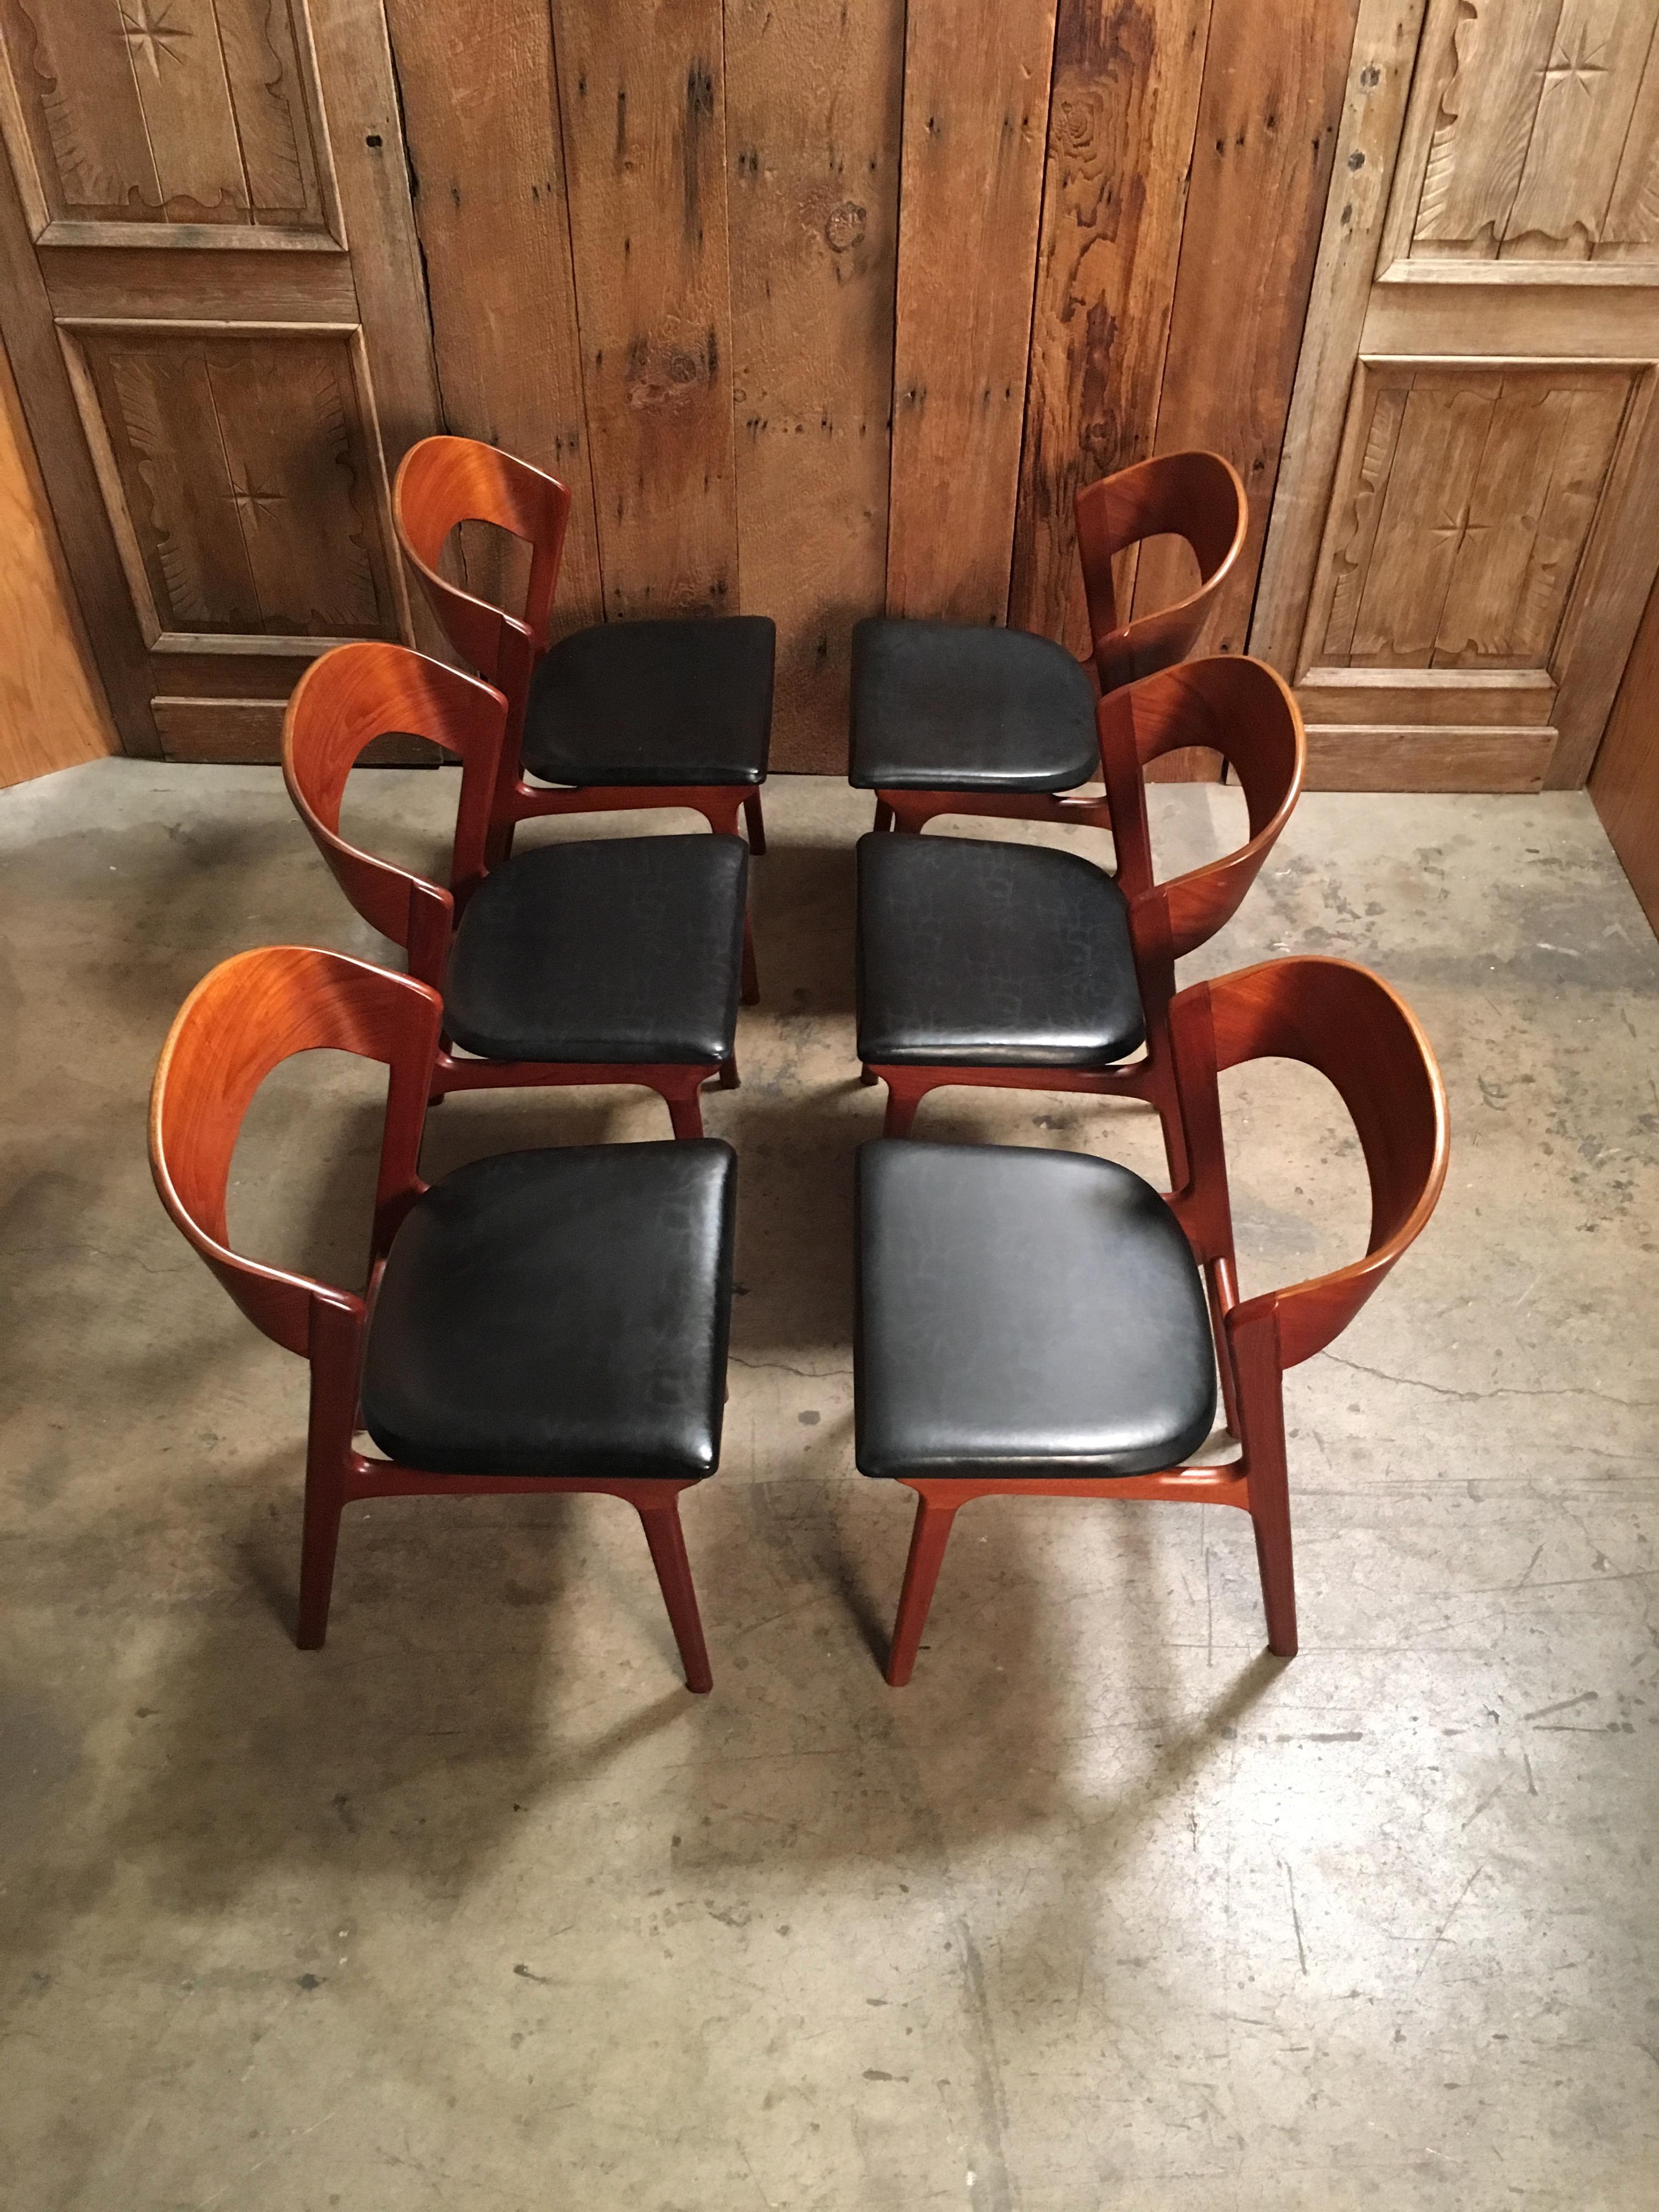  Sculptural Danish Modern Dining Chairs 7